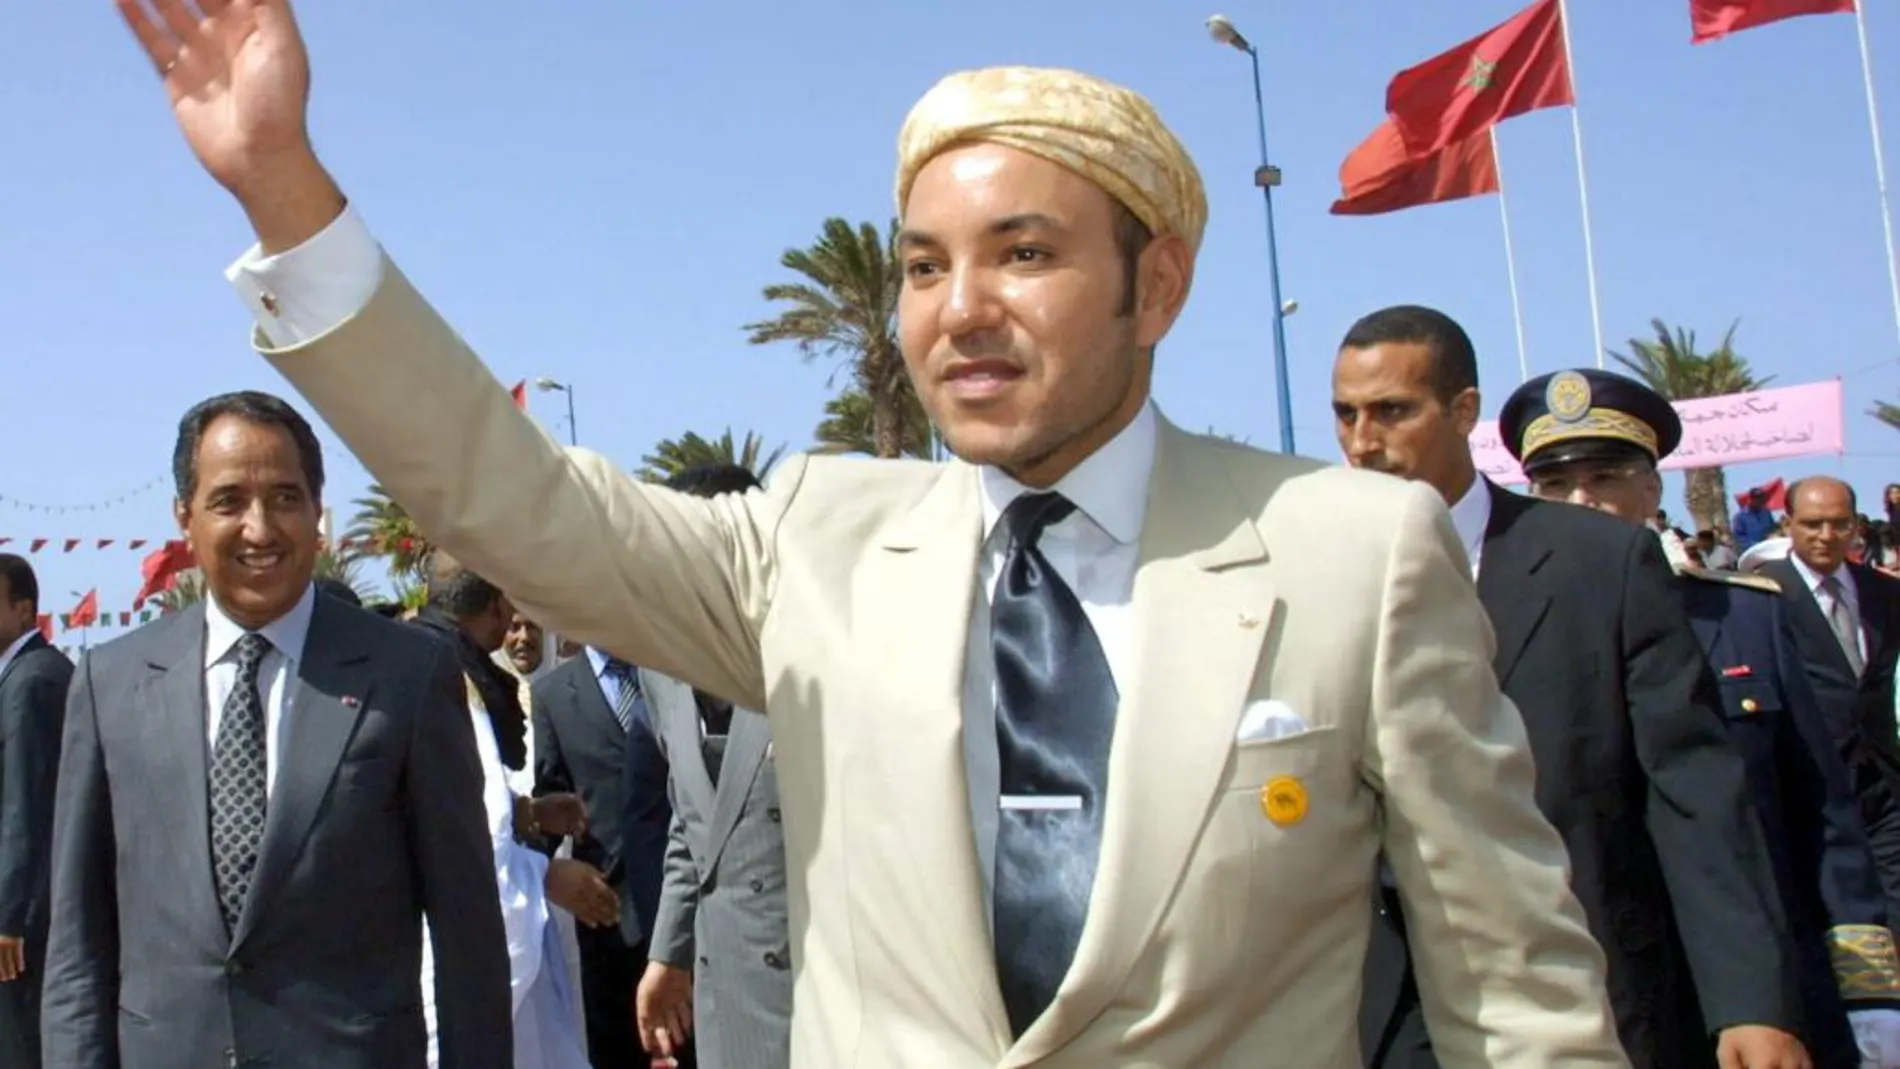 El rey de Marruecos, Mohamed VI, en imagen de archivo